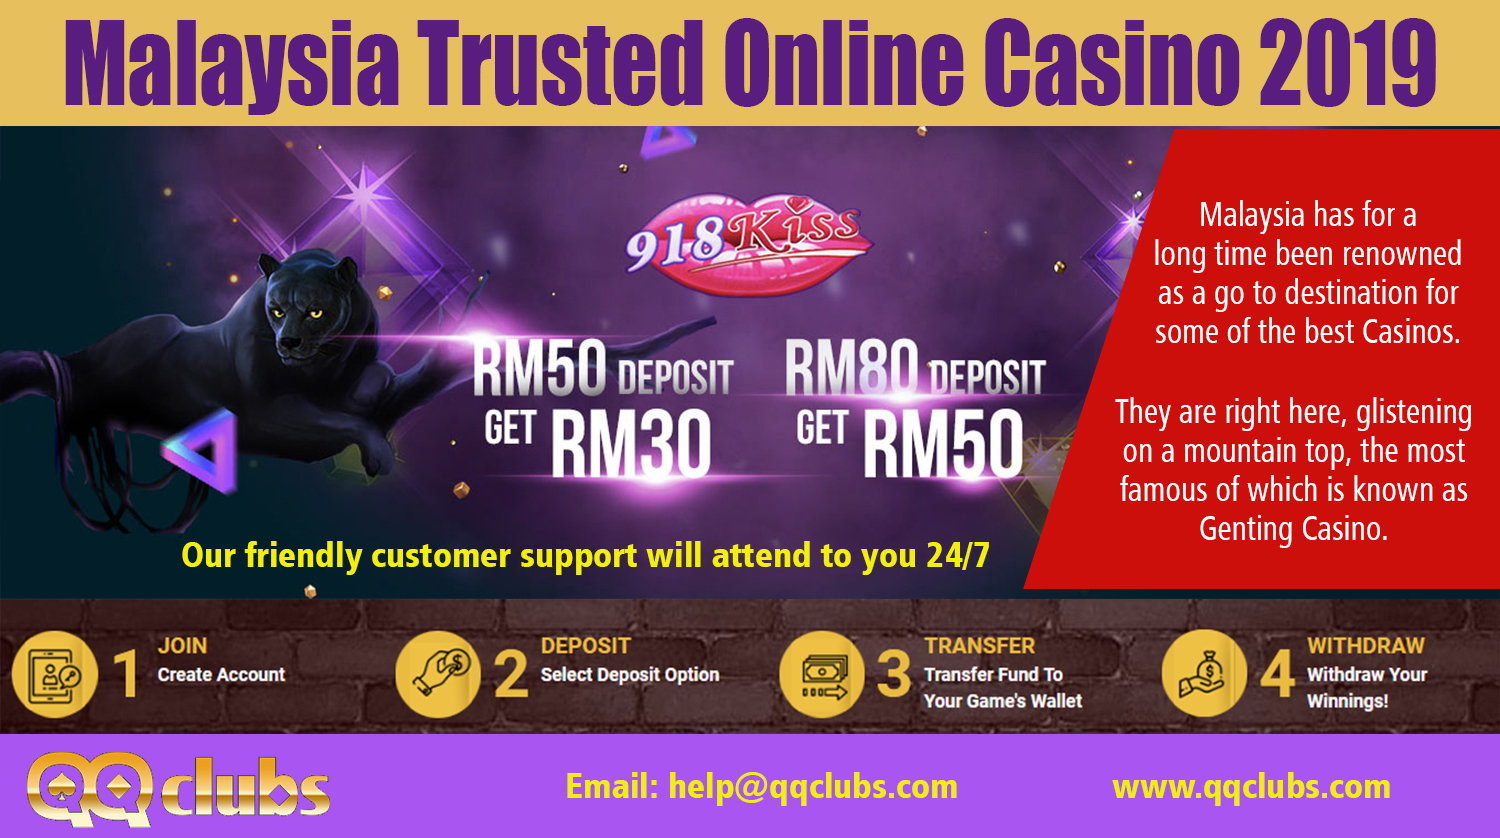 trusted online casino malaysia 2019 vbulletin